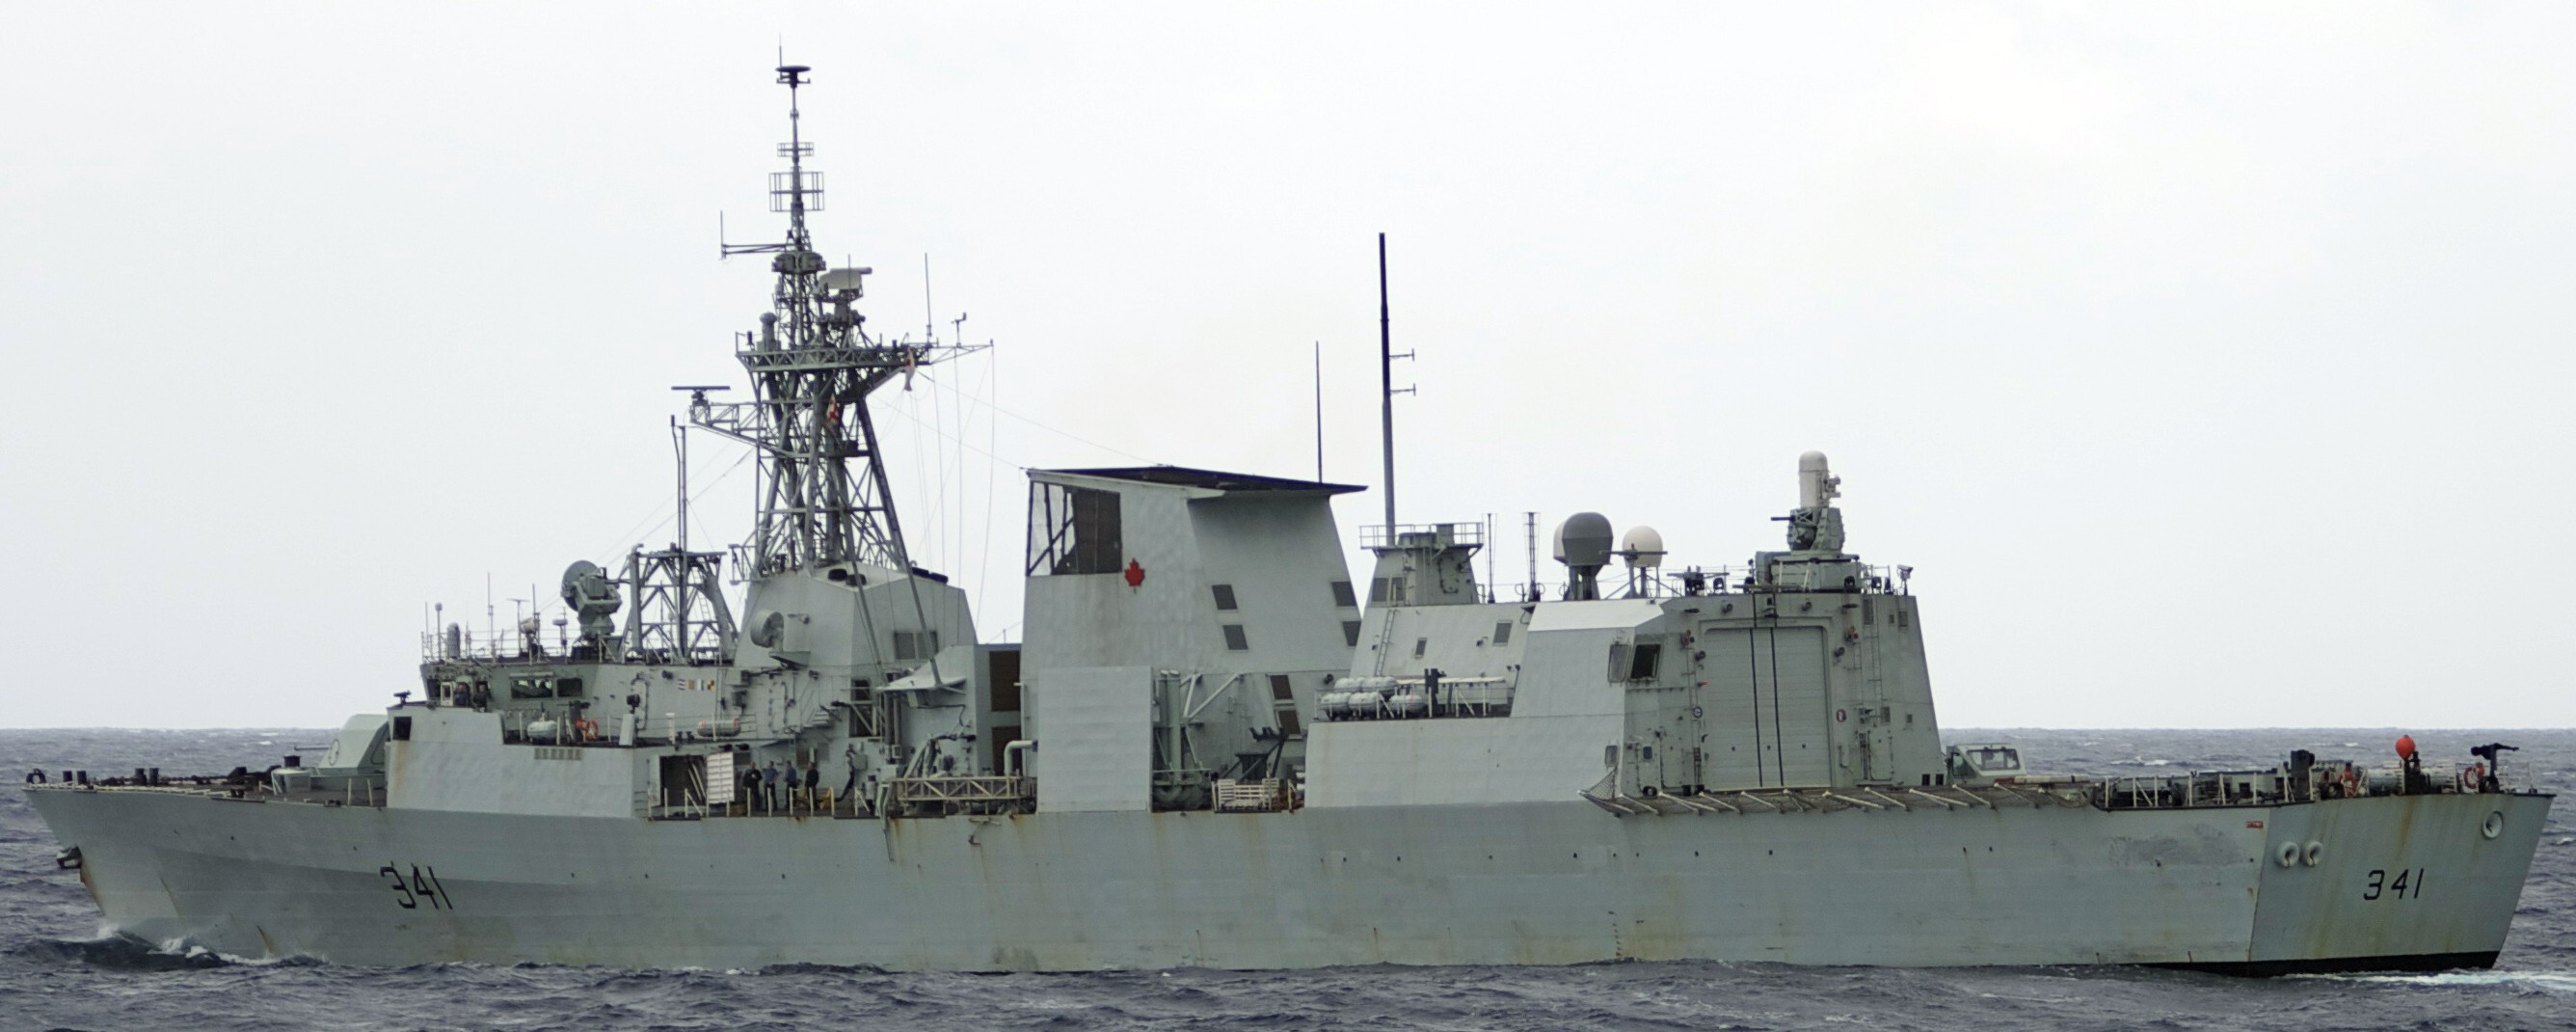 ffh-441 hmcs ottawa halifax class helicopter patrol frigate ncsm royal canadian navy 08